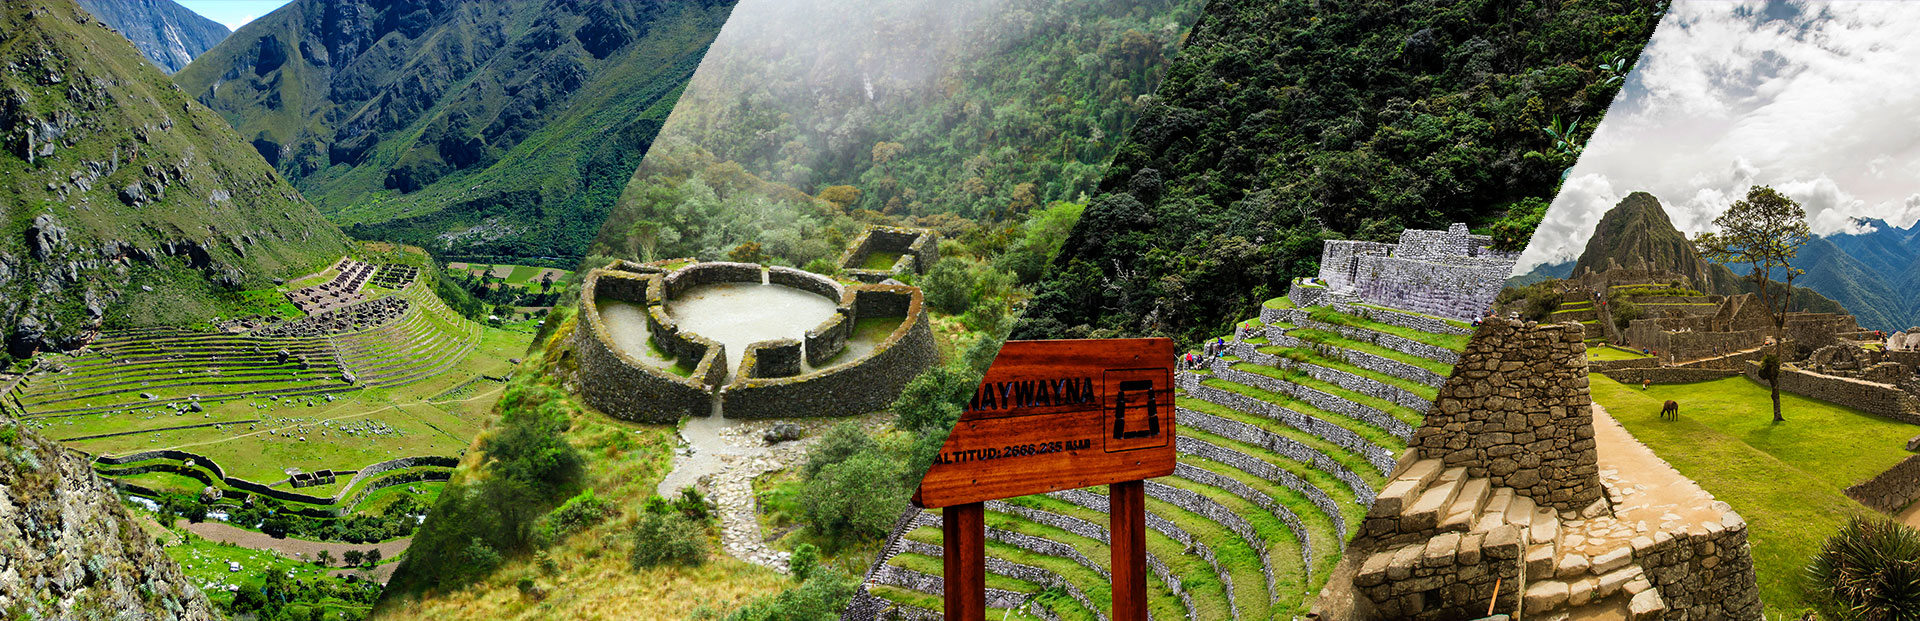 Hike the Inca Trail Treks to Machu Picchu with the #1 Local Tour Operator.